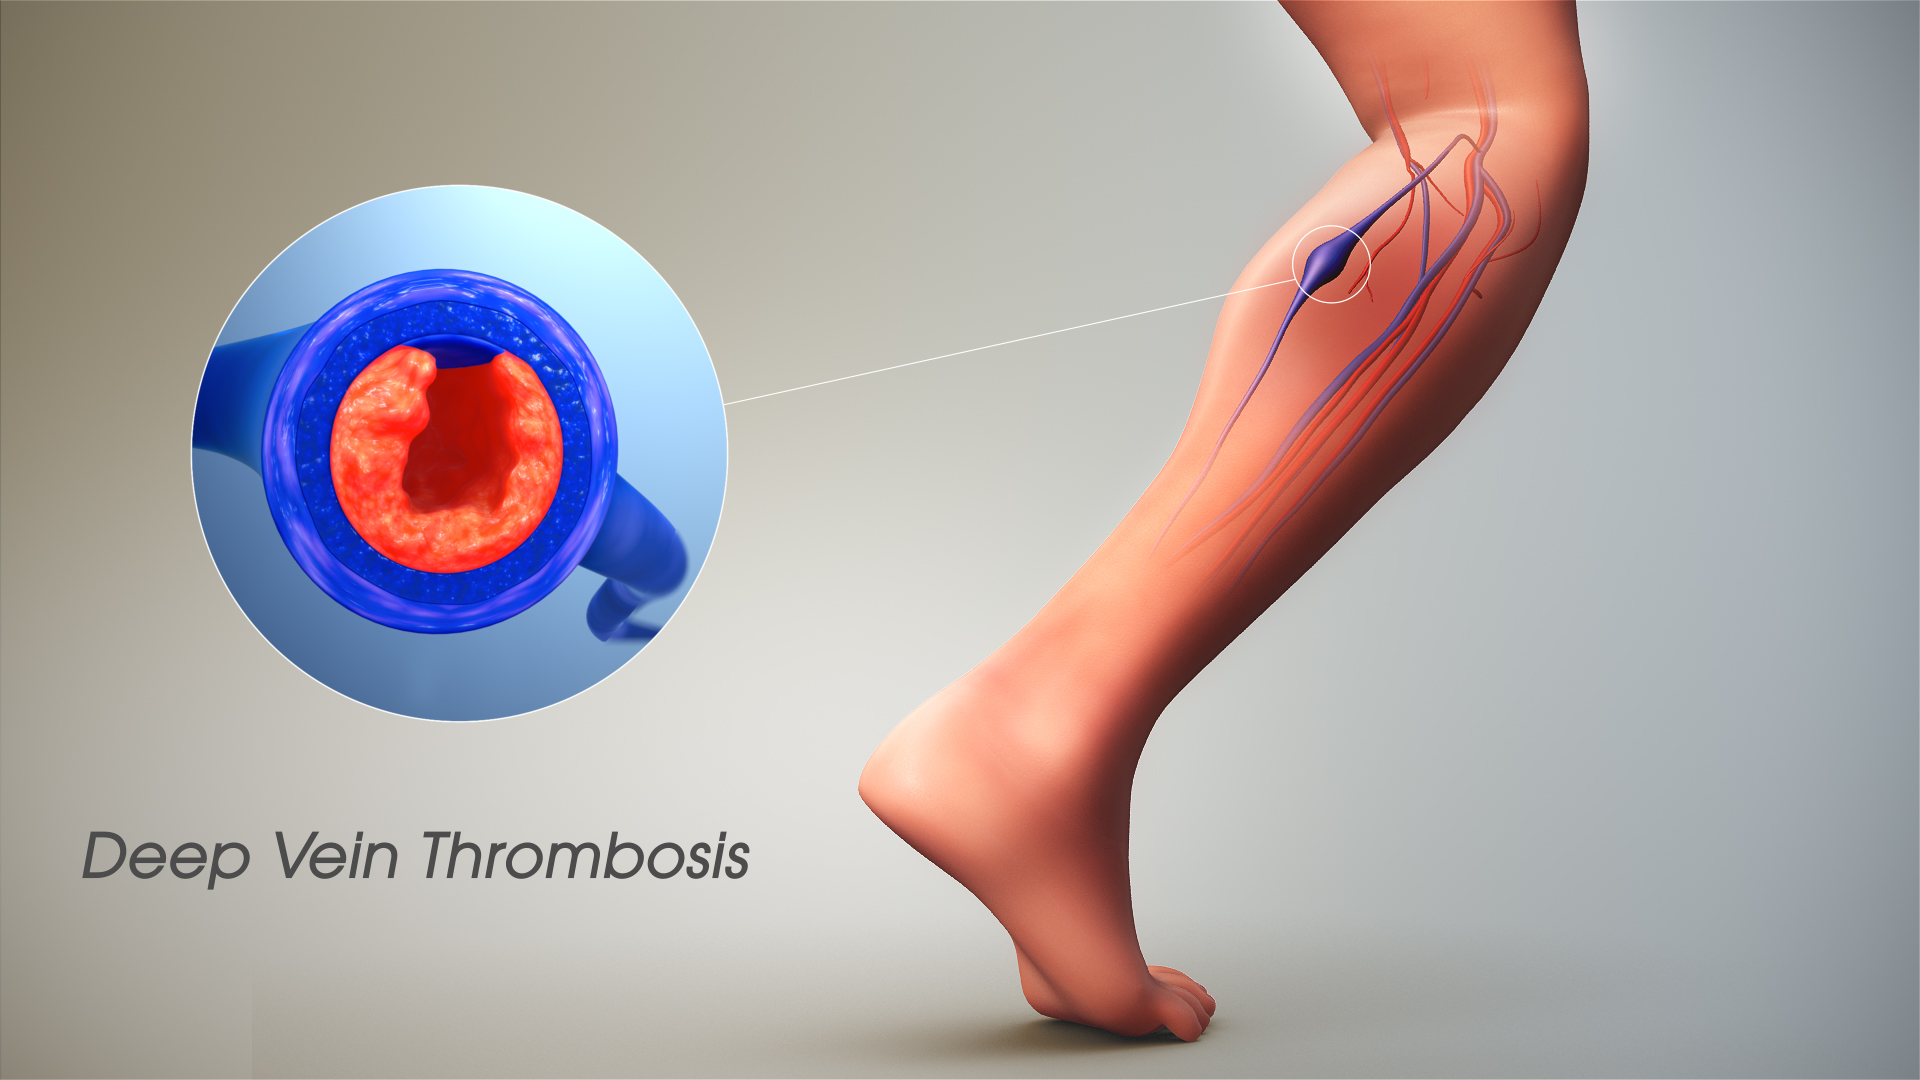 Deep Vein Thrombosis (DVT): Symptoms, Causes, and Treatment